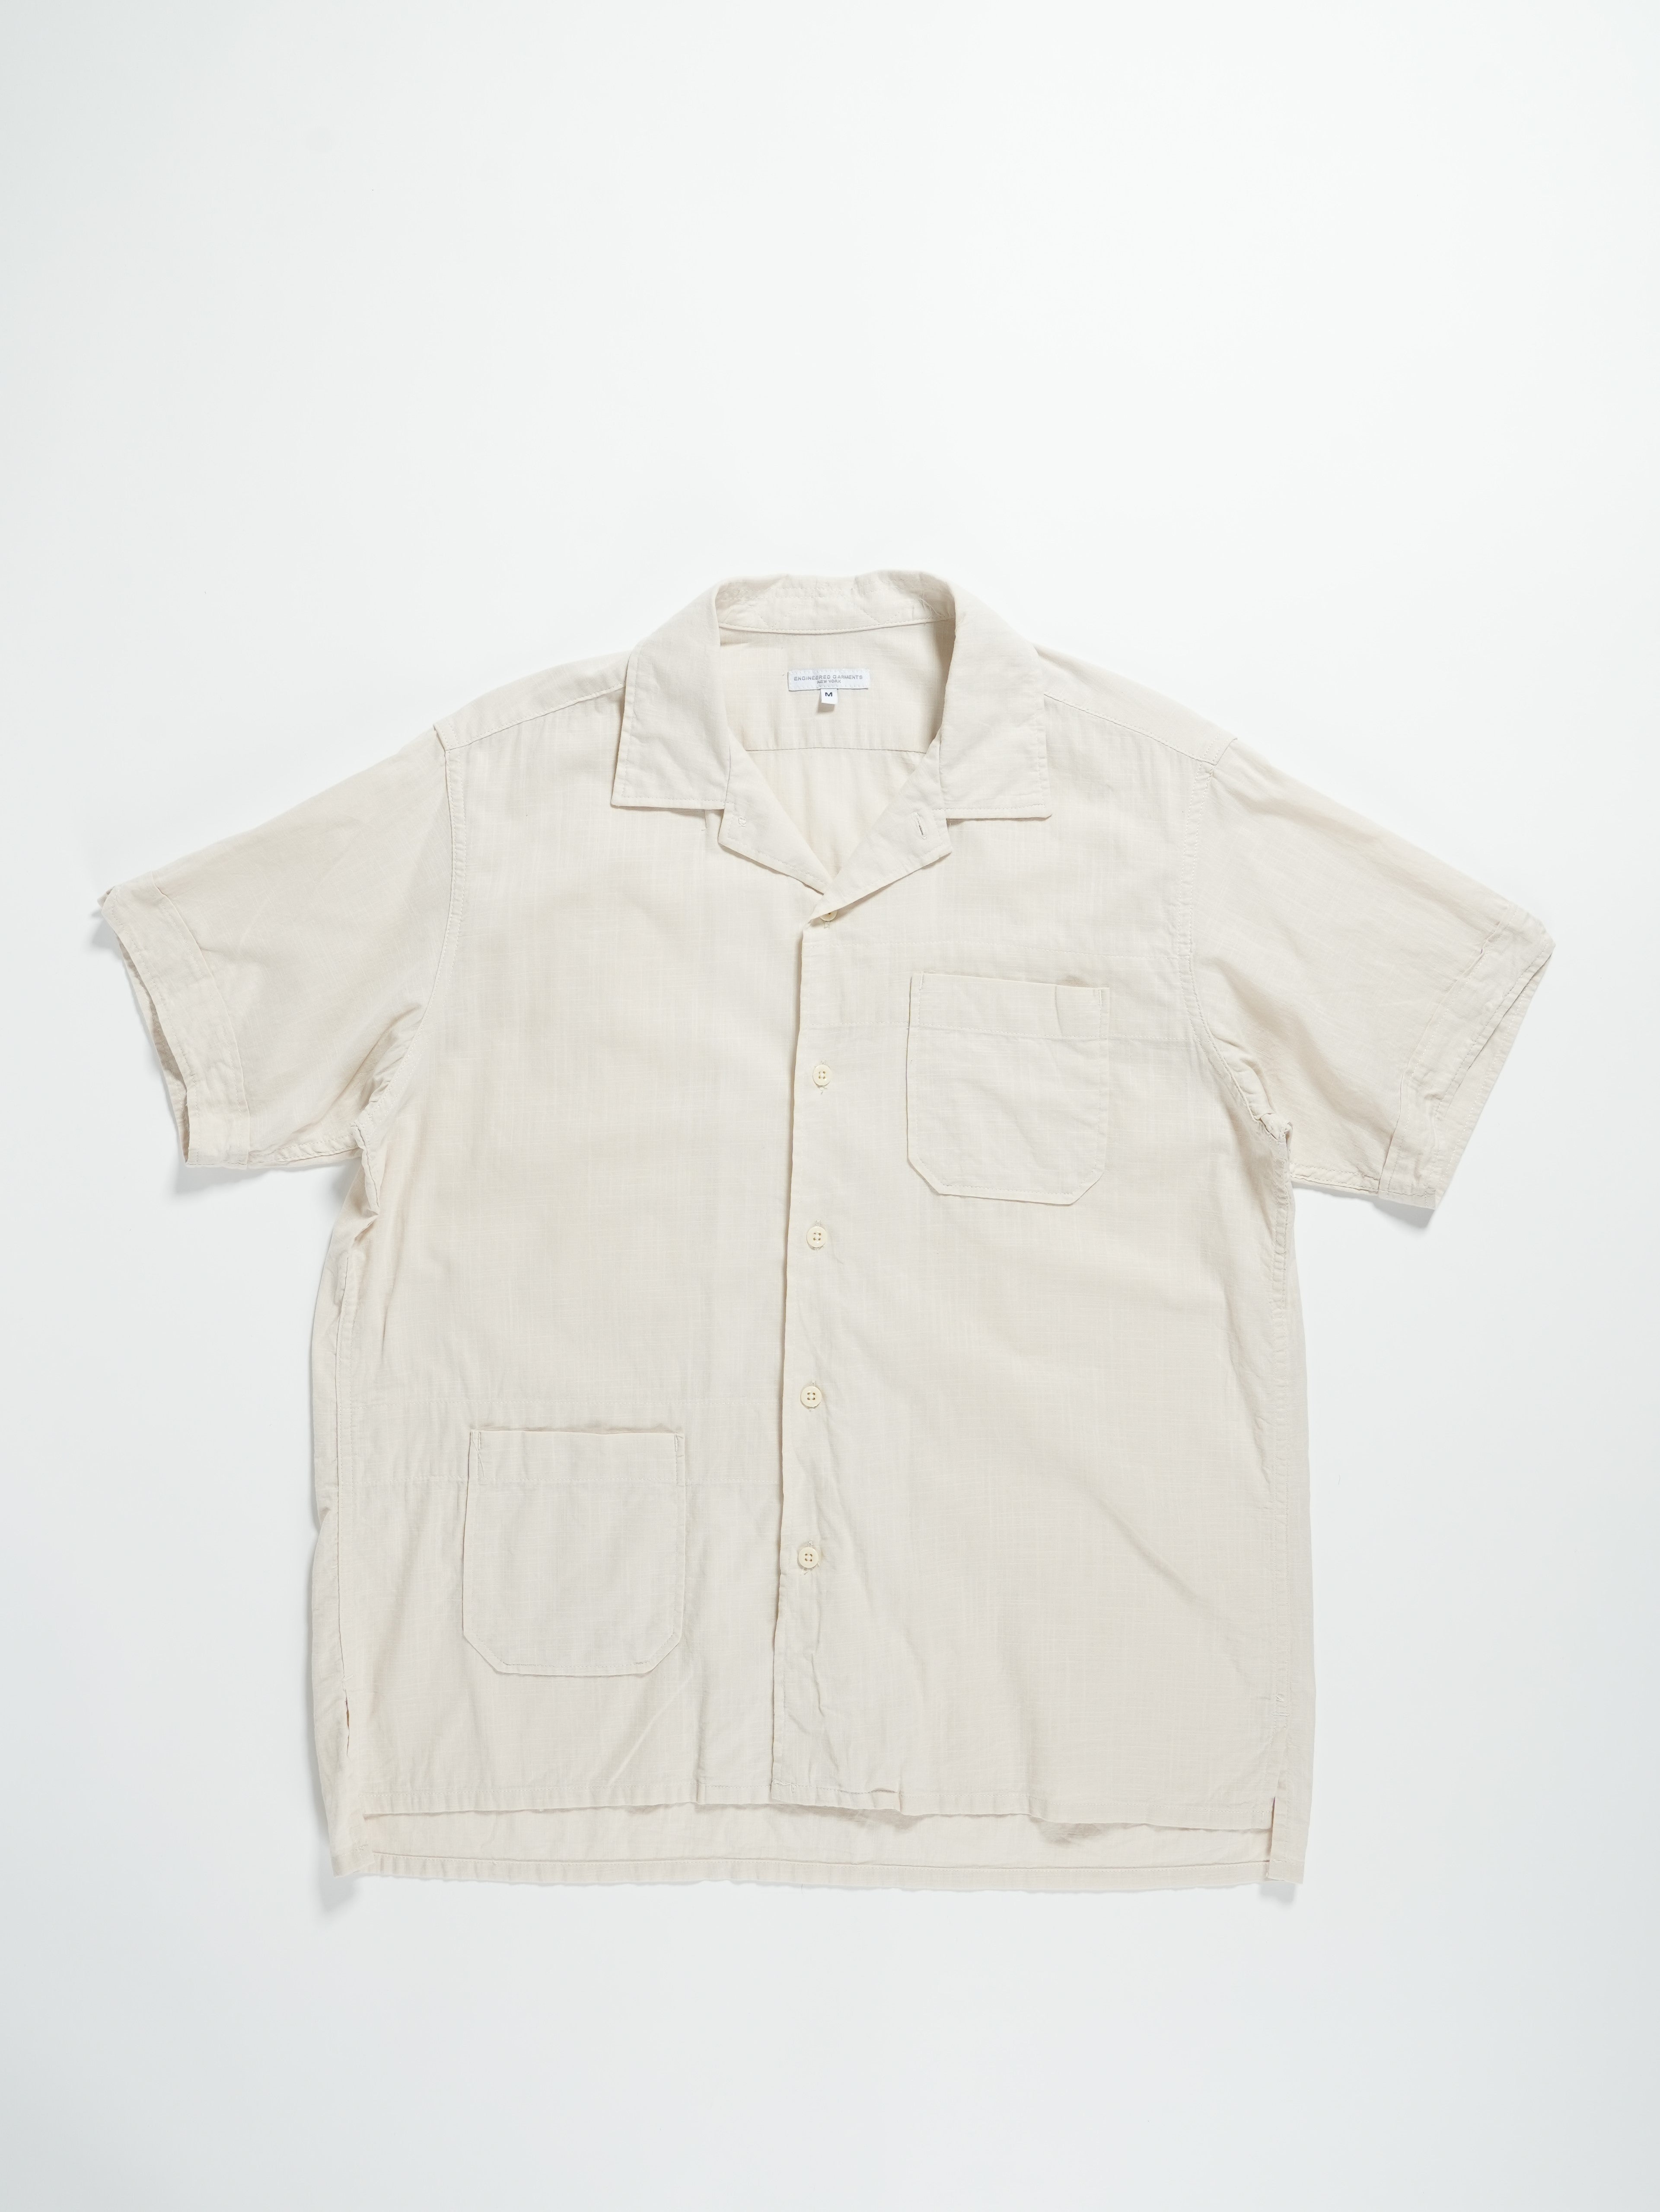 Camp Shirt - Beige Cotton Handkerchief